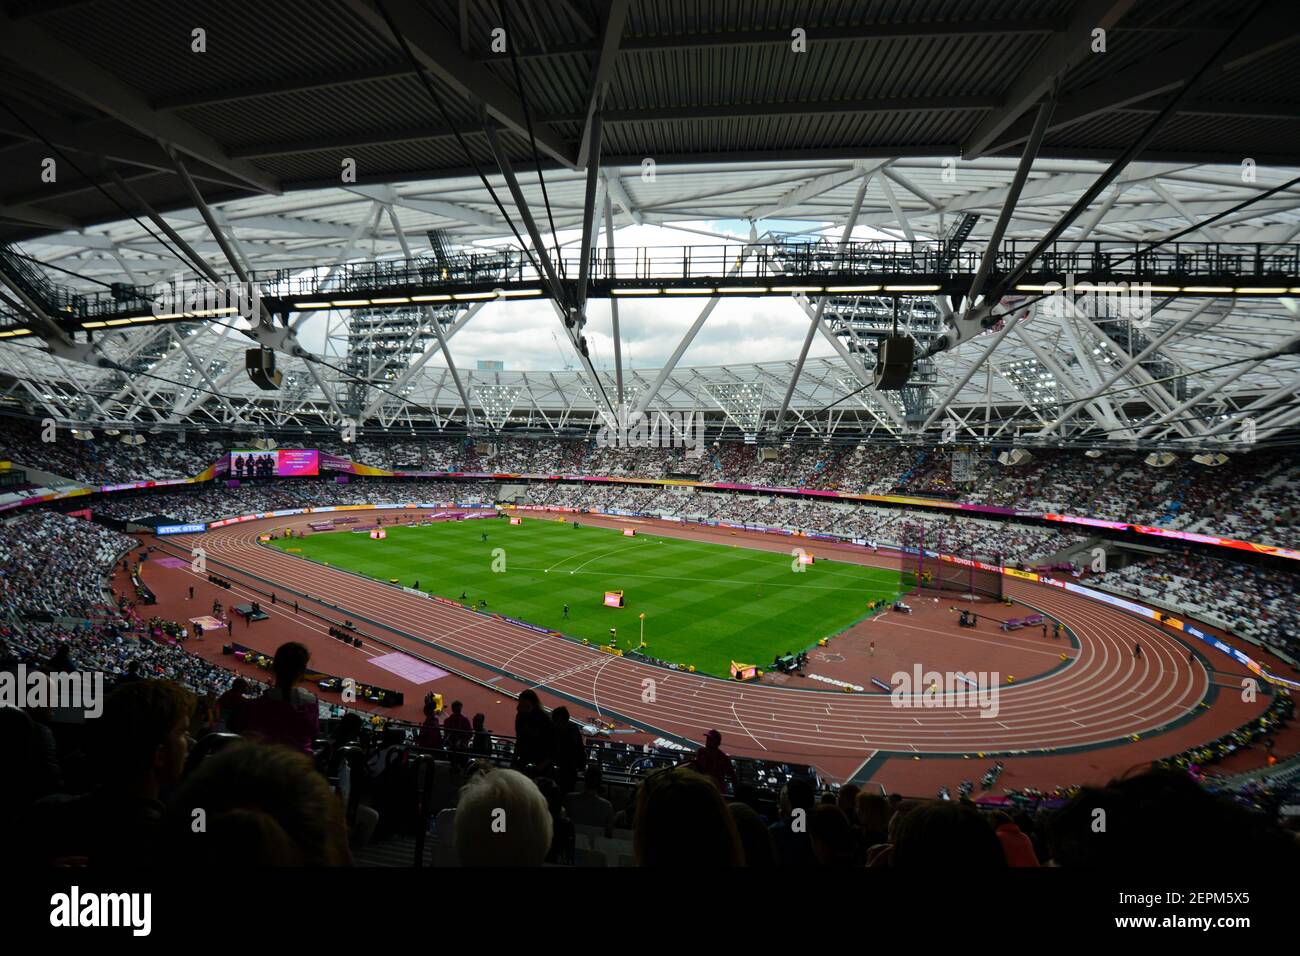 London Stadium, wide angle view. IAAF World Athletics Championships, London 2017 Stock Photo